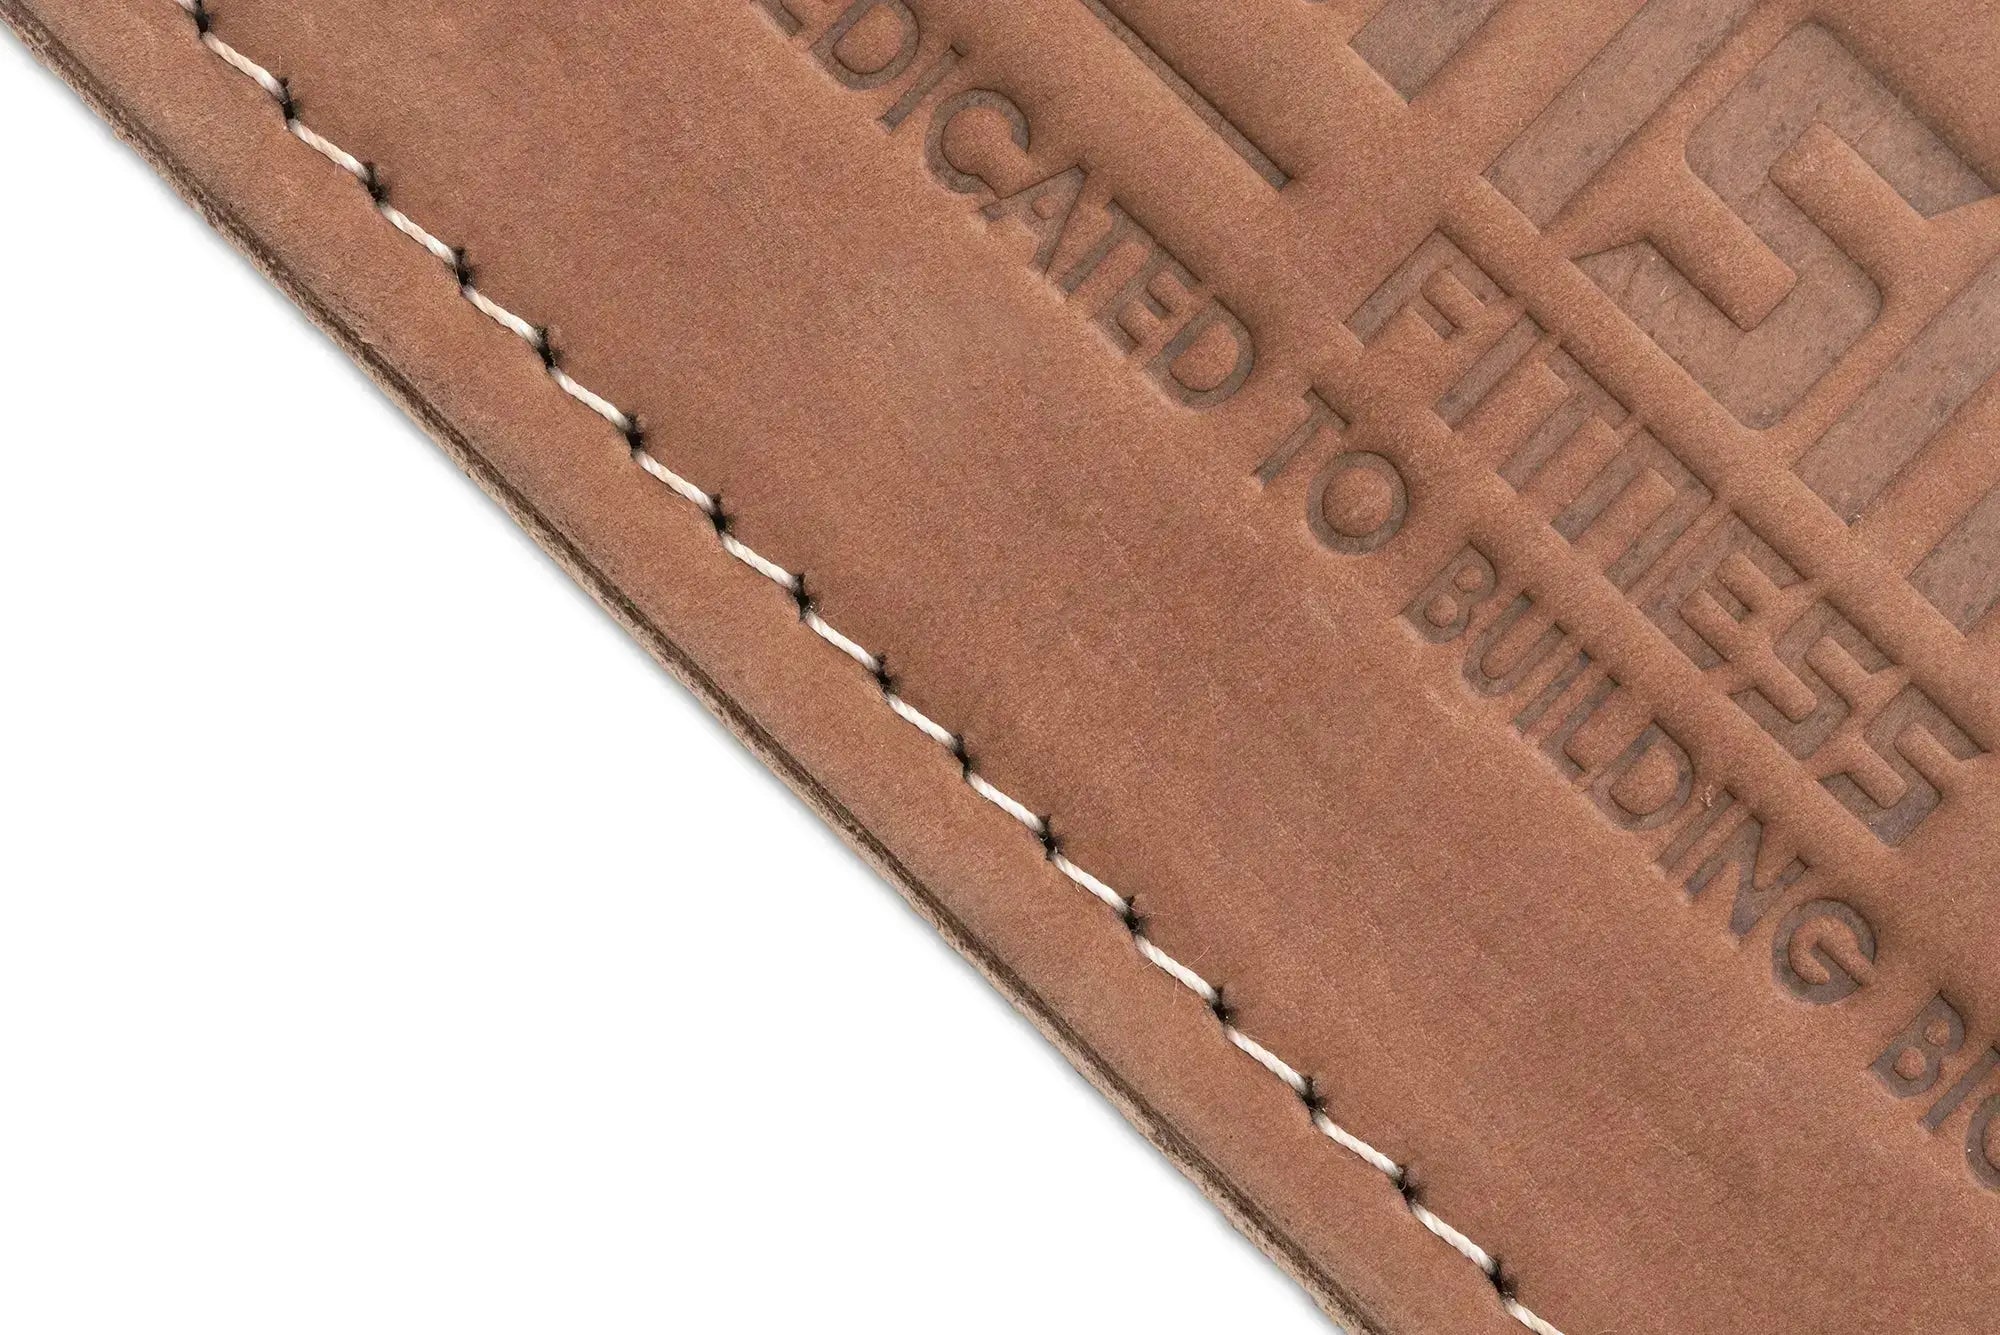 4 Inch Shibusa Premium Leather Lifting Belt